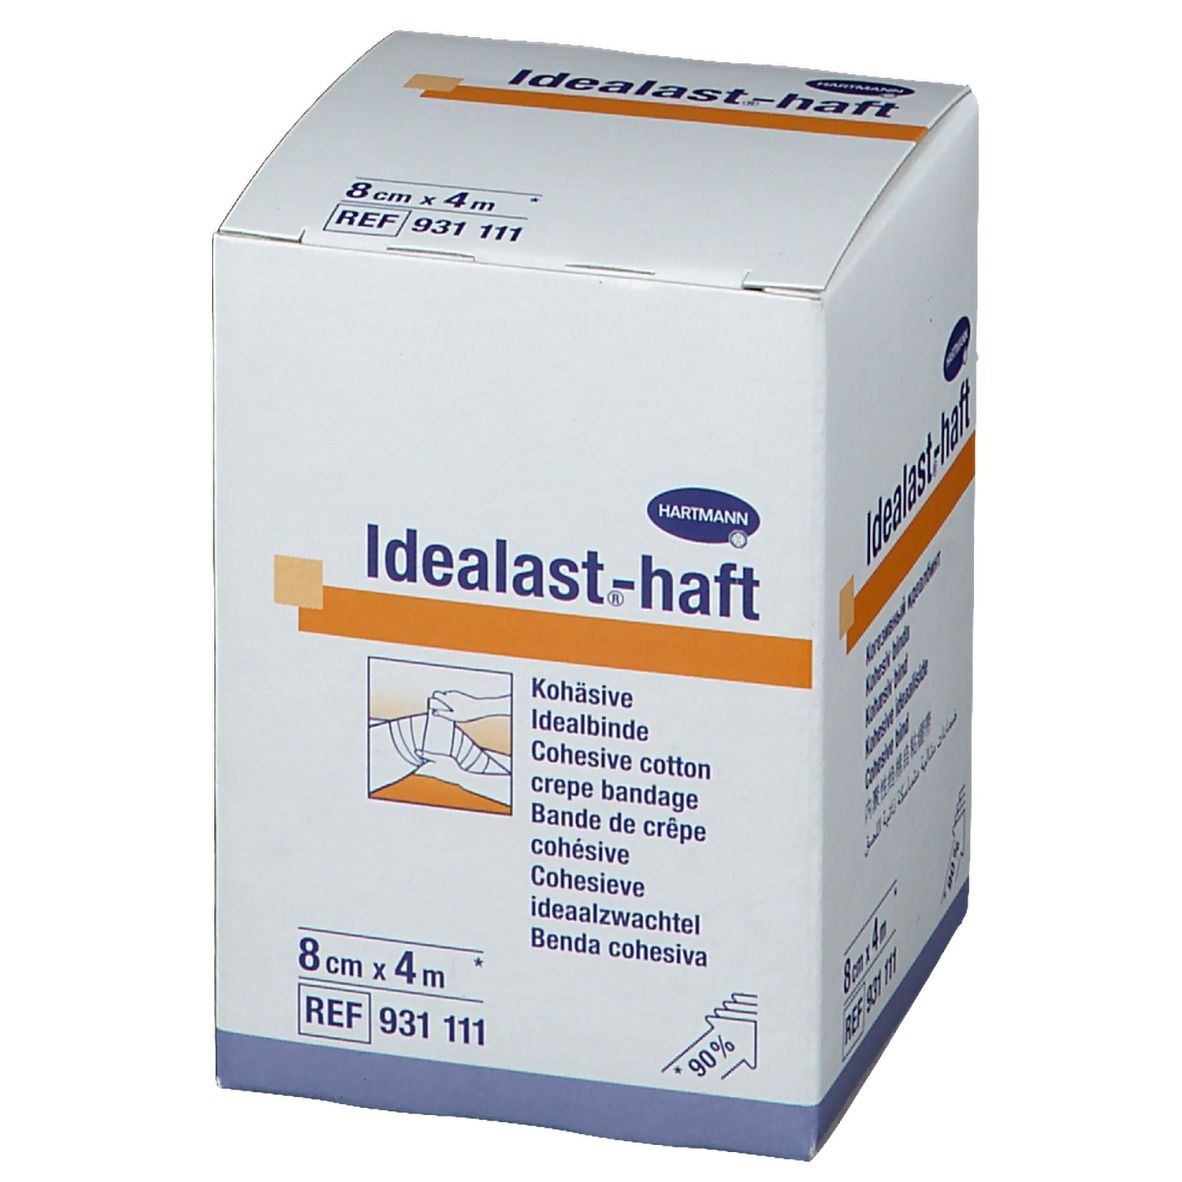 Idealast®-haft Idealbinde 8 cm x 4 m